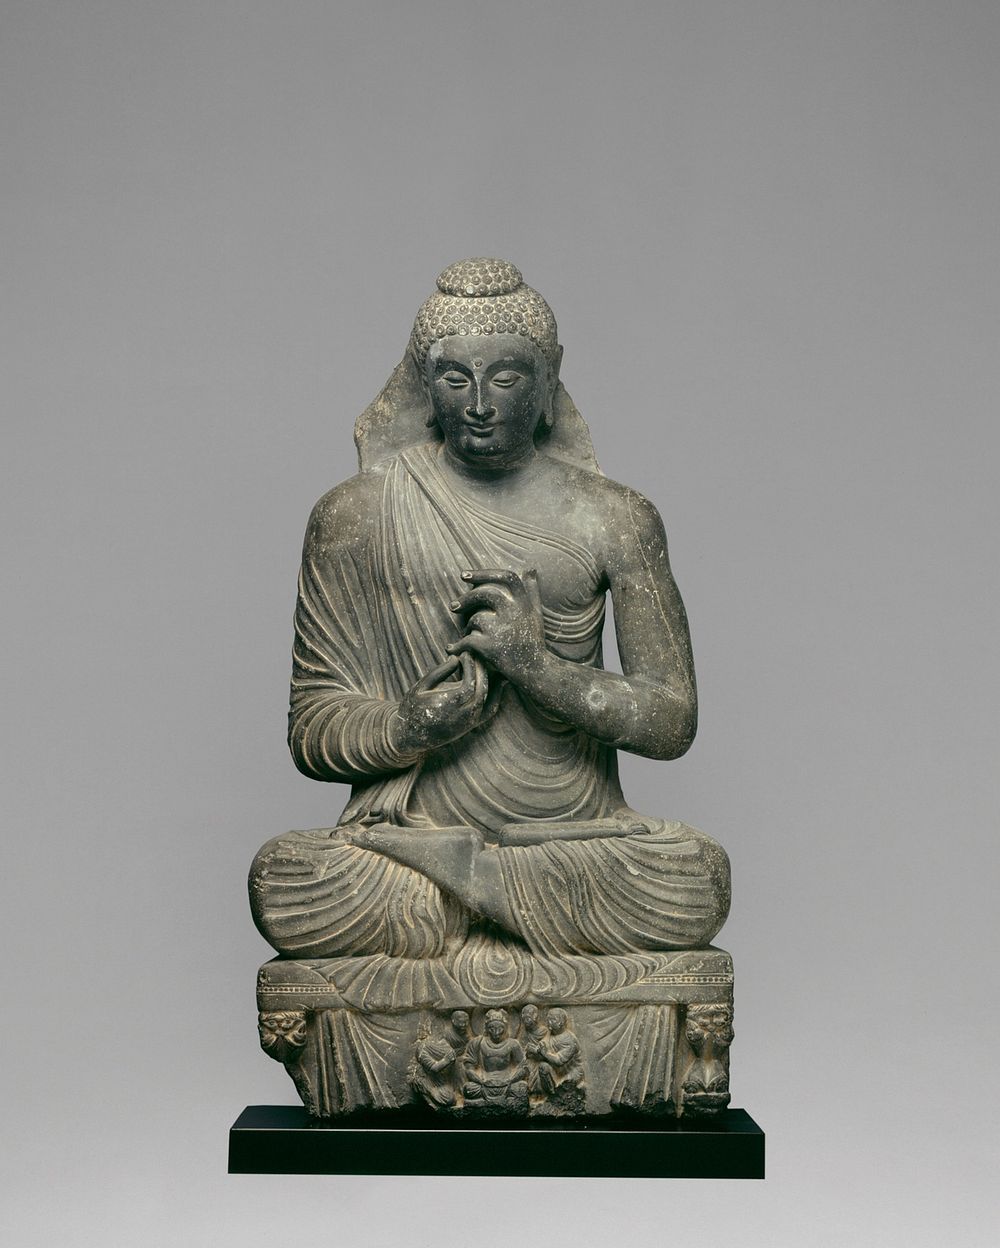 Seated Buddha with Hands in Preaching Gesture (dharmachakrapravartanamudra)